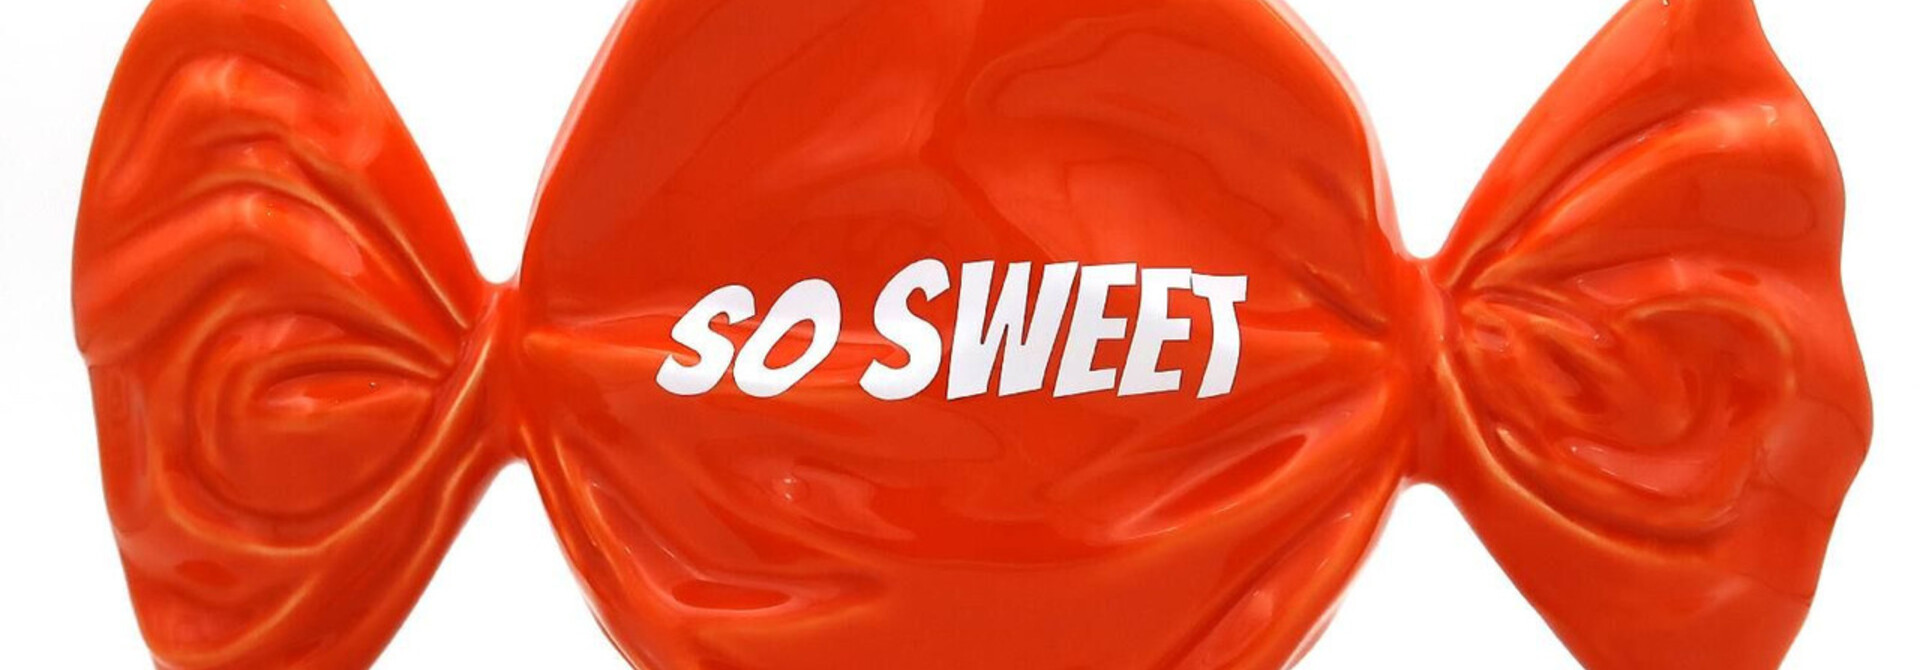 Sweet Chupa Chups So Sweet Orange - Limited Edition